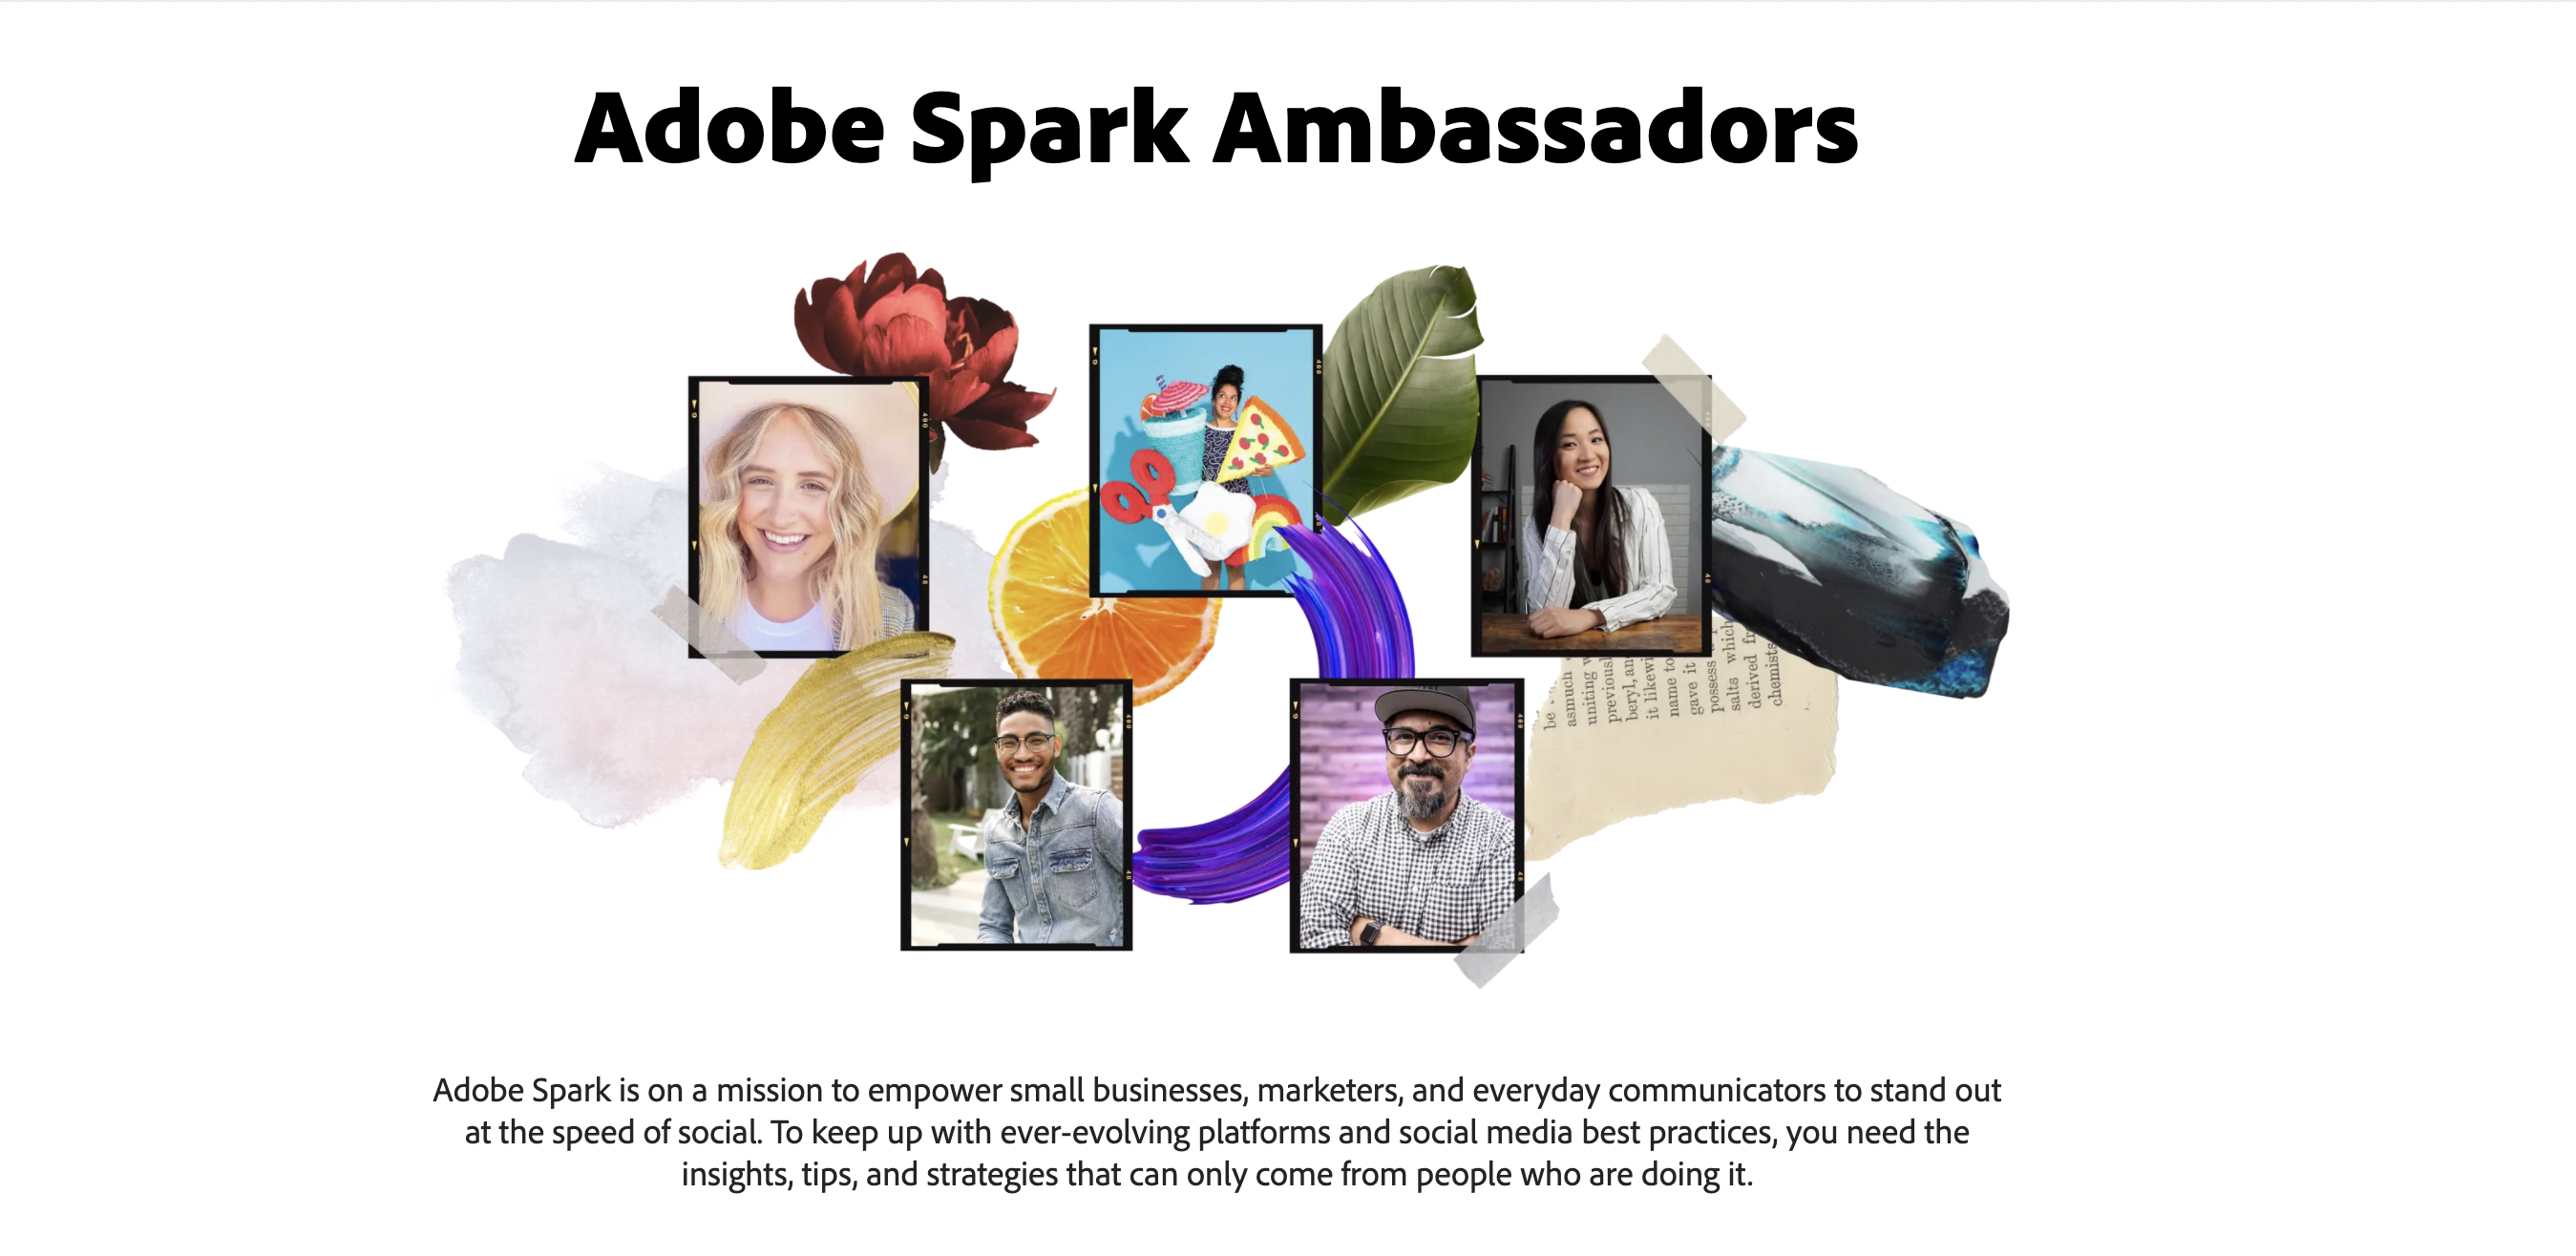 Adobe Spark Ambassadors